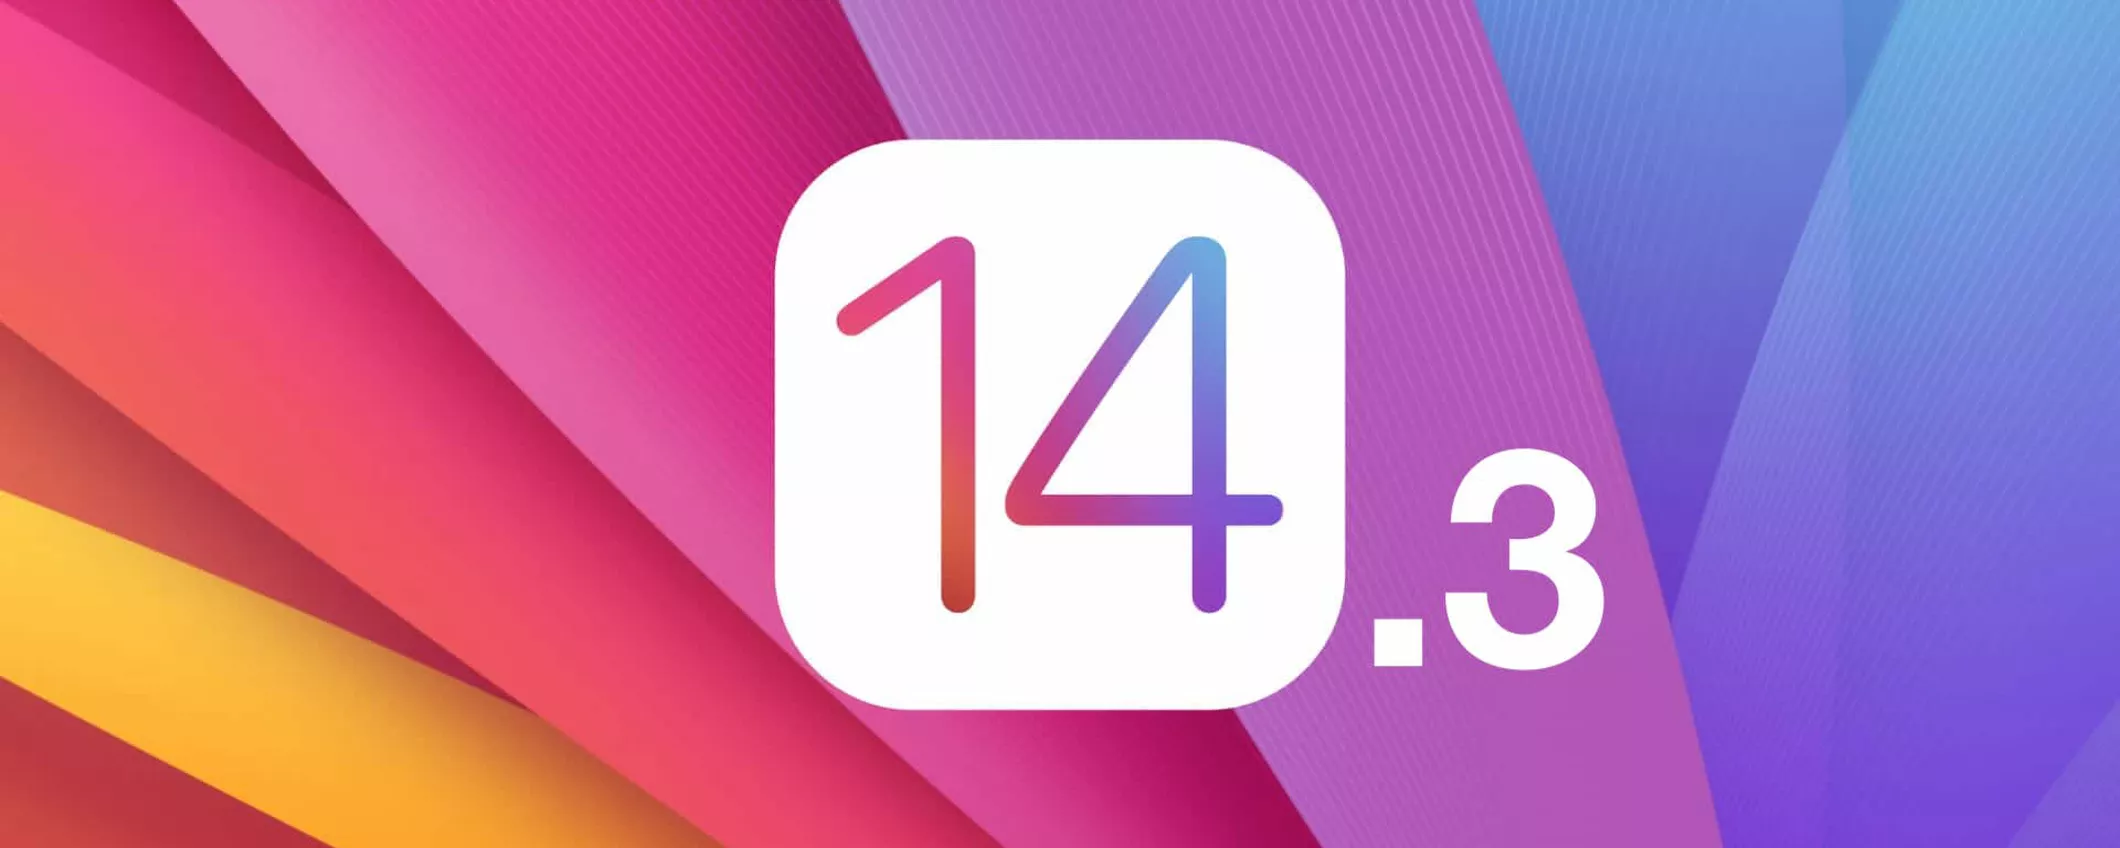 iOS 14.3 svela AirPods Studio, Supporto Controller PS5 e altro